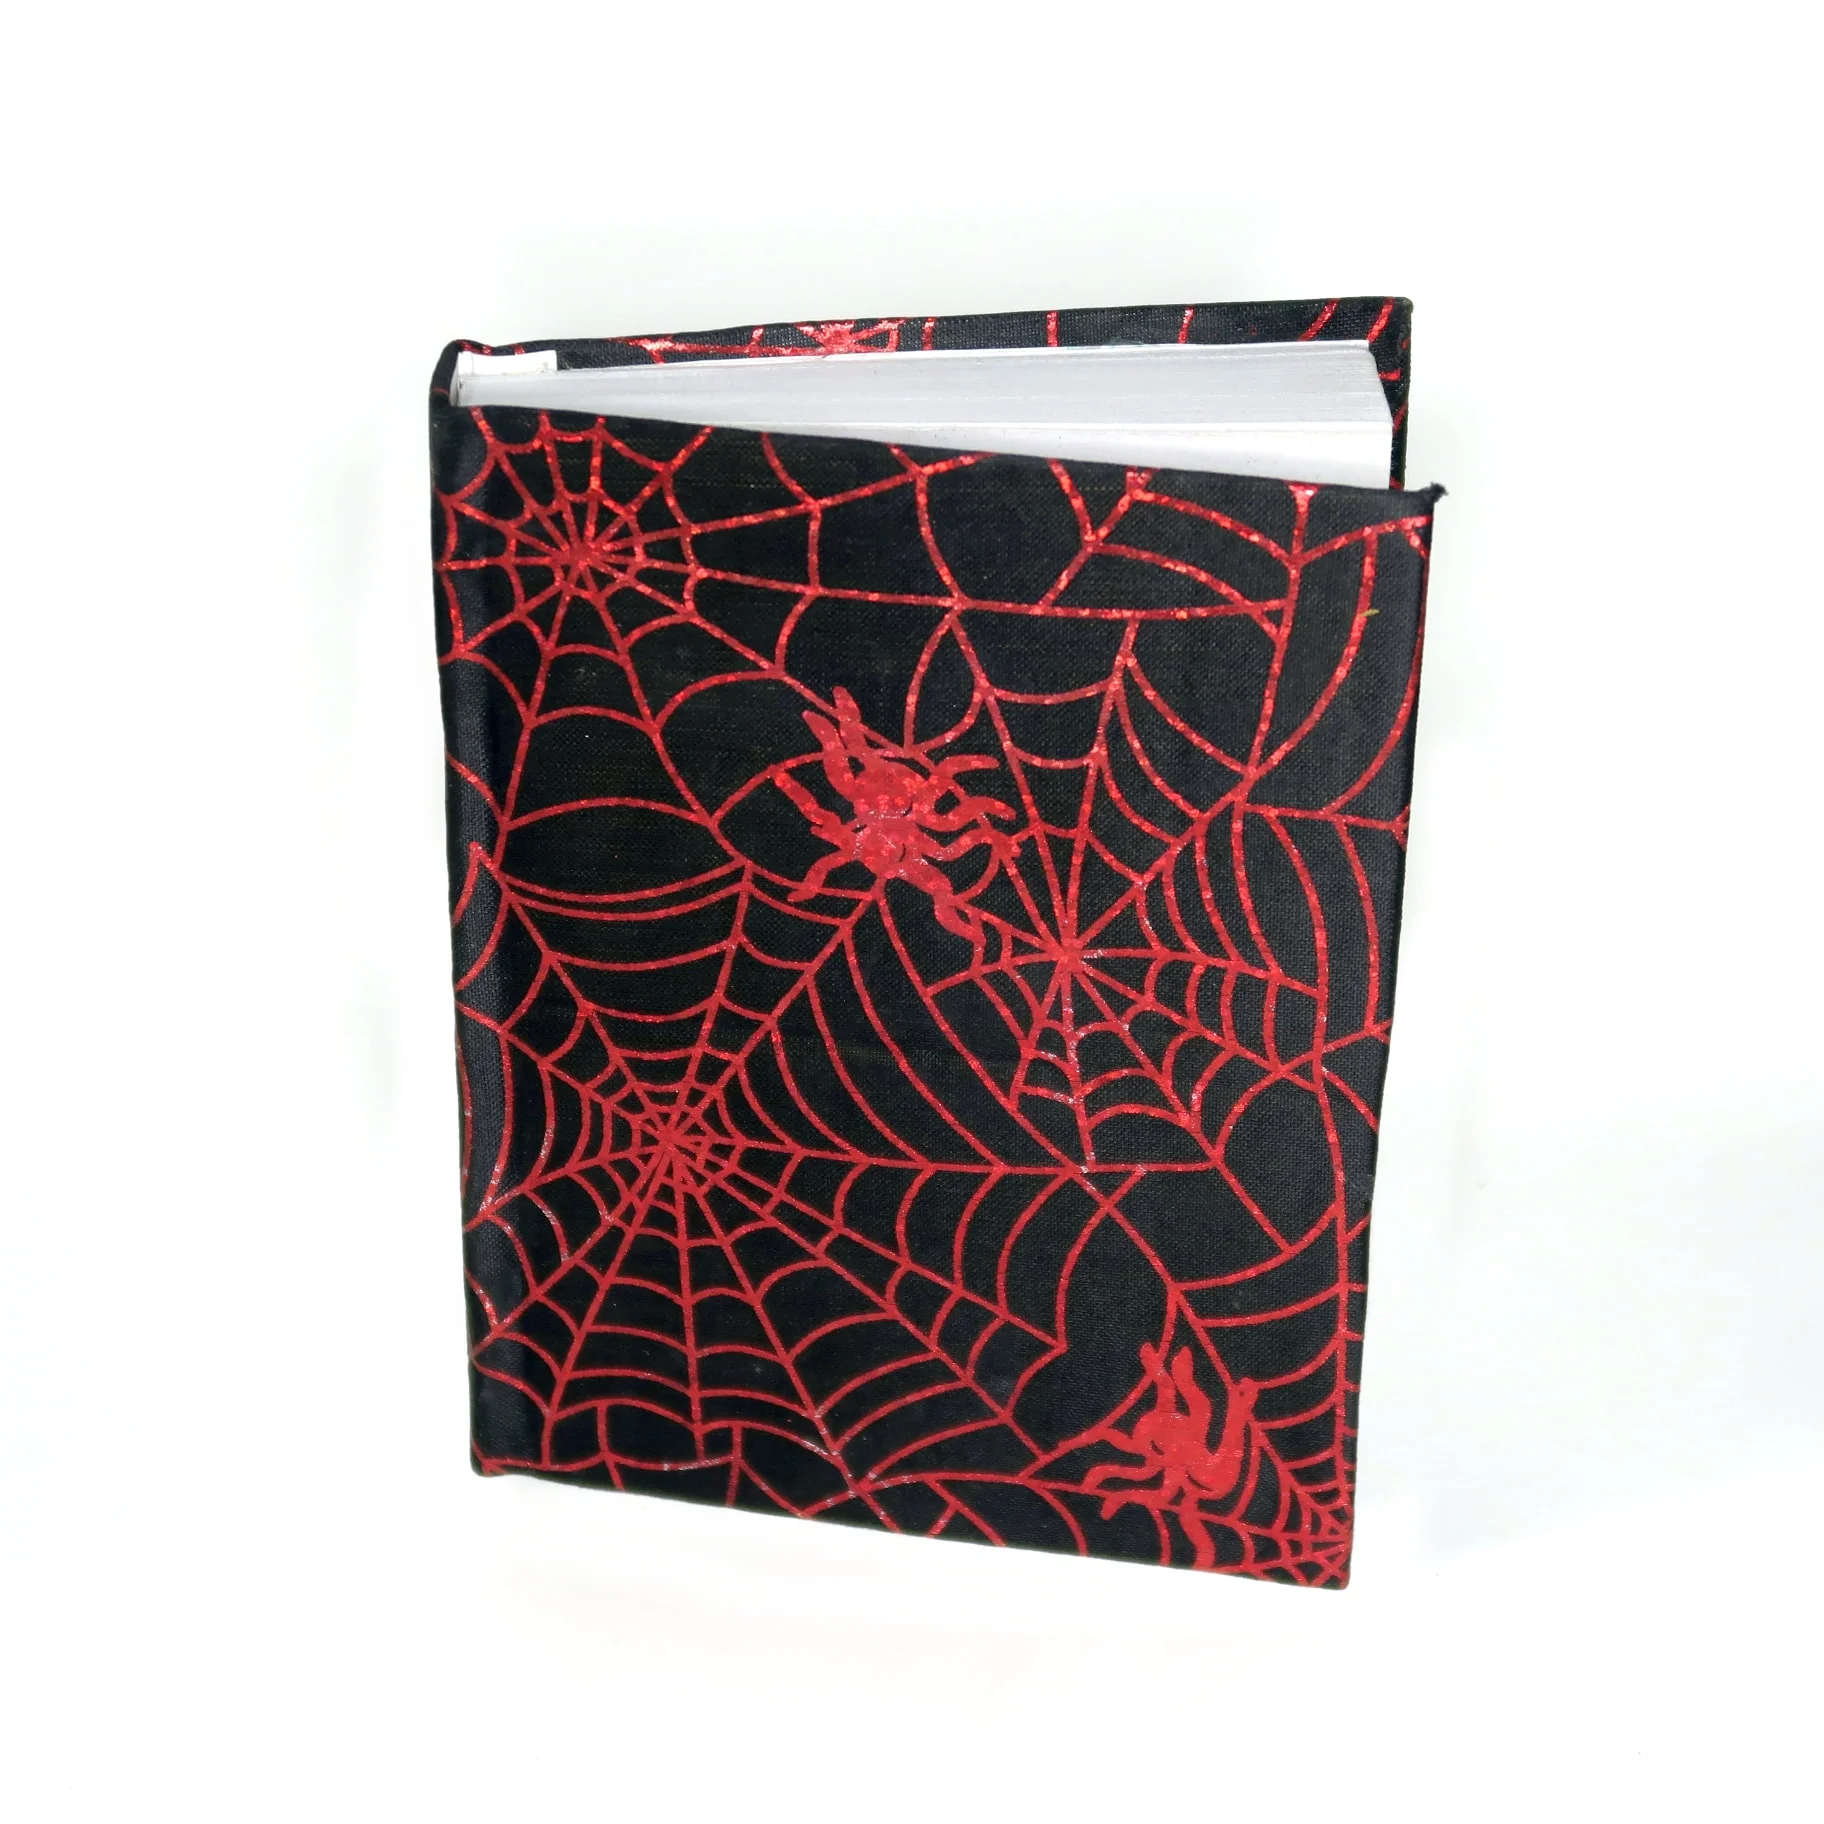 Imperfect Shiny Spiderweb Journal  - $19.00